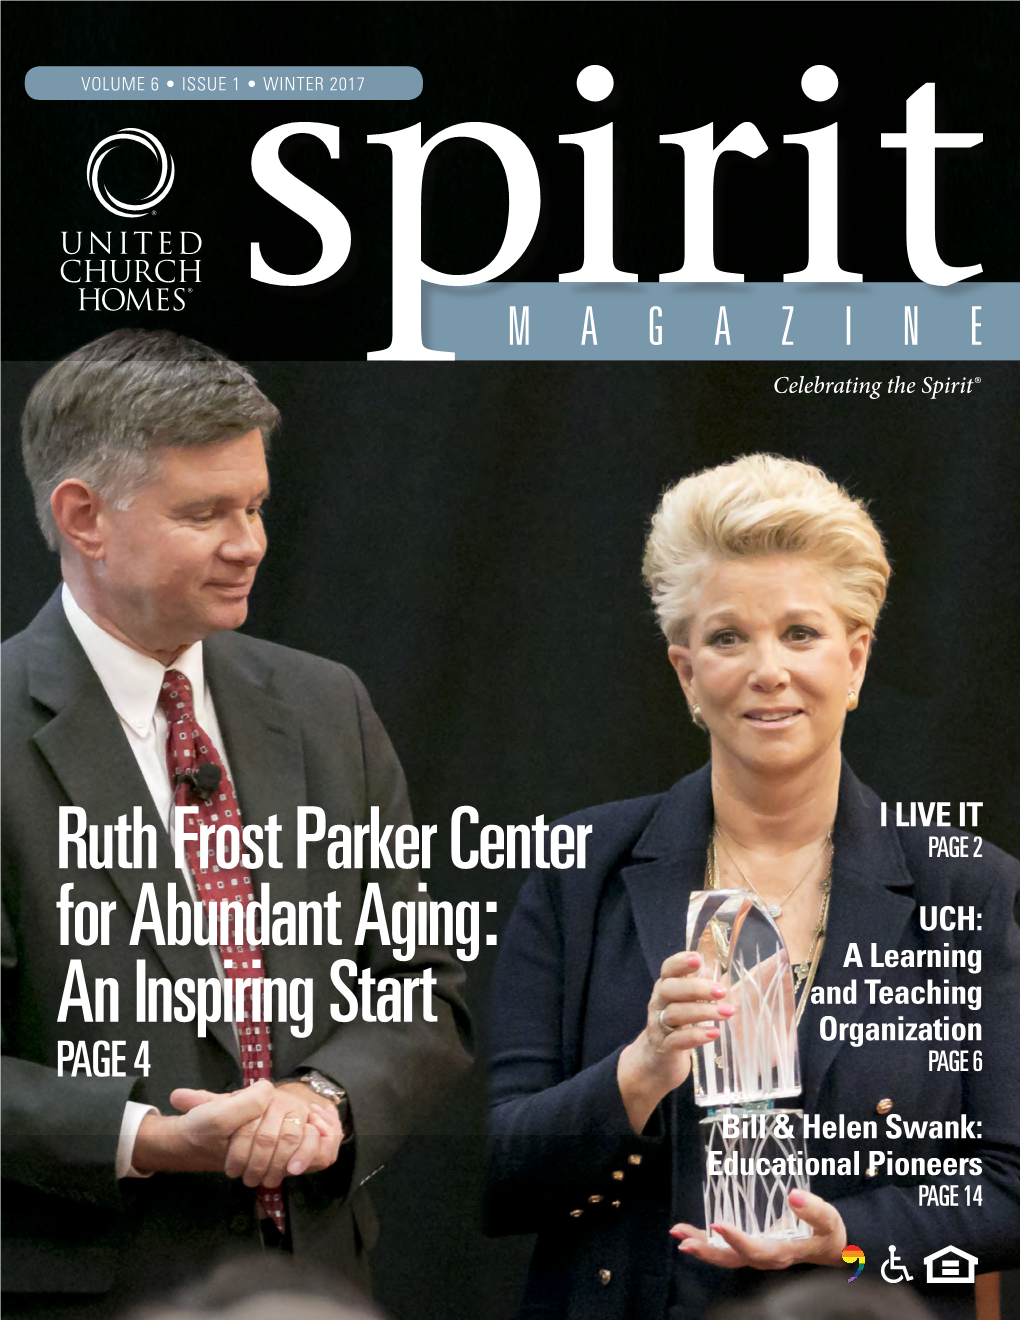 Ruth Frost Parker Center for Abundant Aging